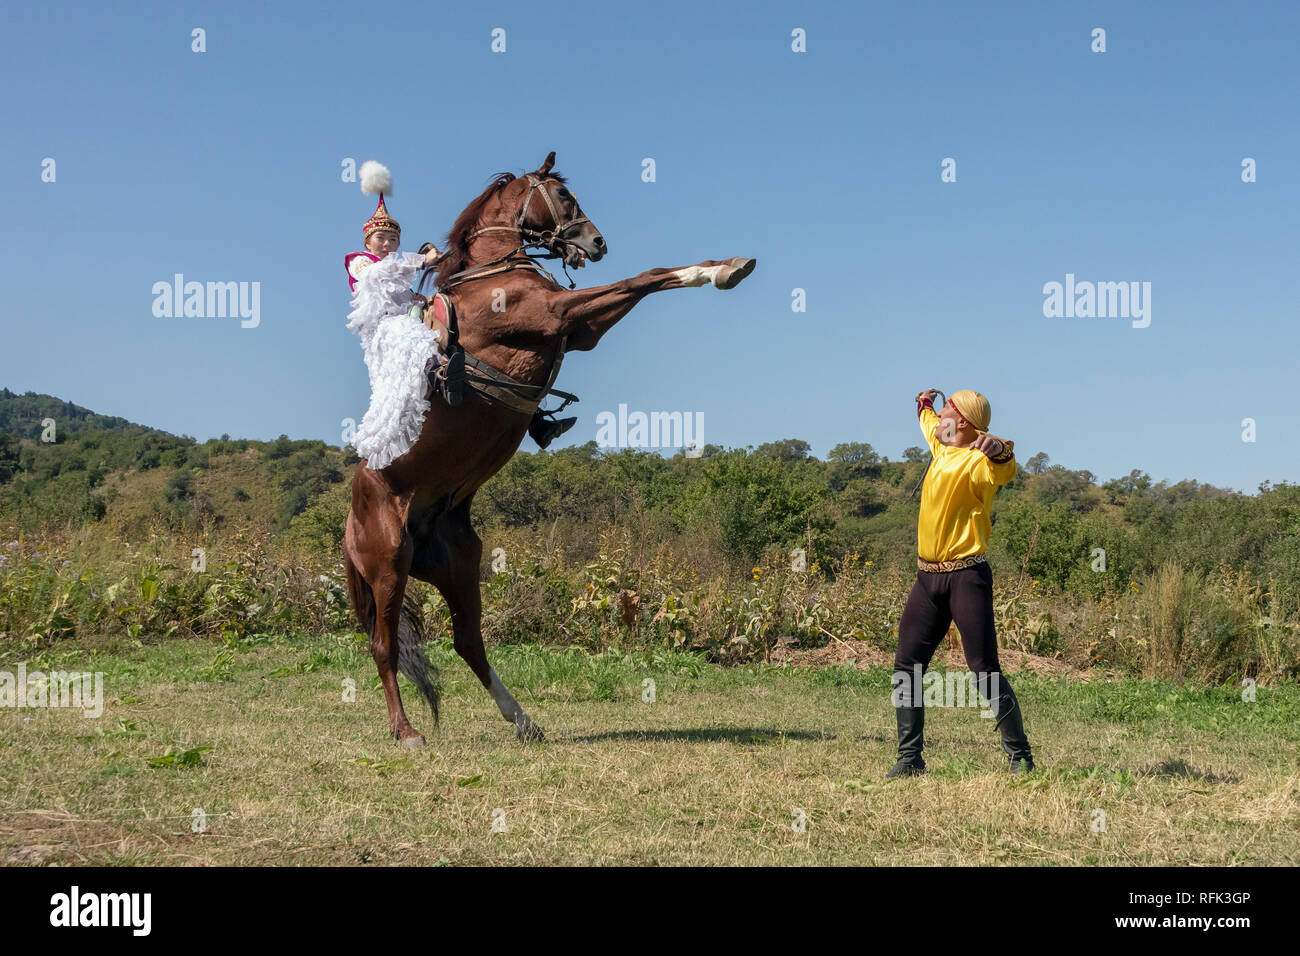 Kazakh woman in traditional attire on a rearing horse, Almaty, Kazakhstan Stock Photo